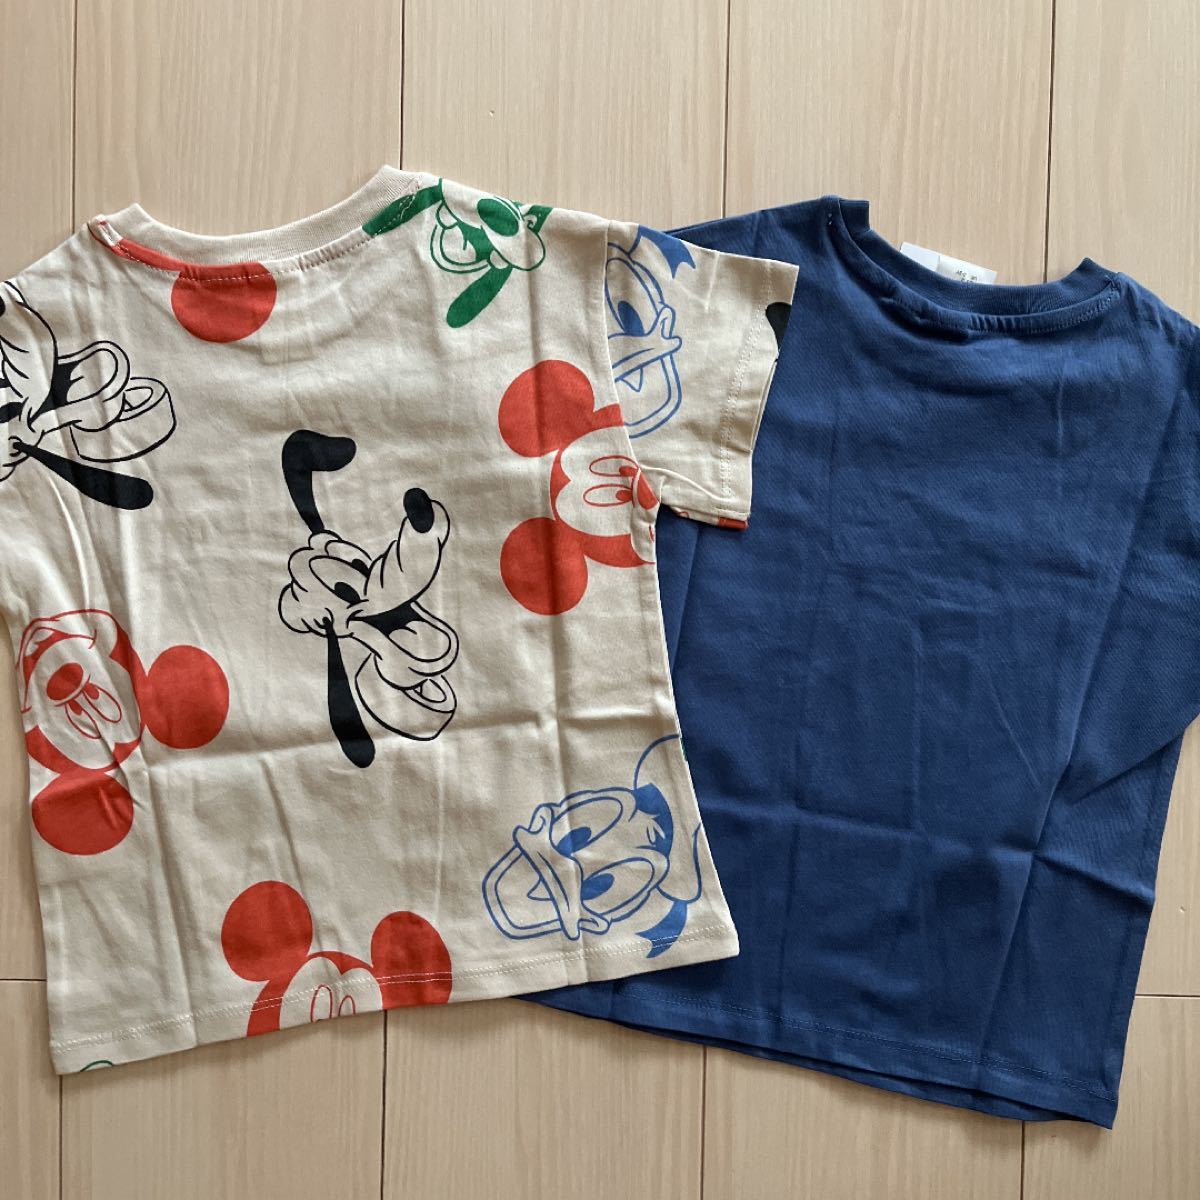 【 Disney】ディズニー H&M ミッキー☆ドナルド☆プルート☆グーフィー 総柄☆ブルー 半袖 Tシャツ 2点セット 100